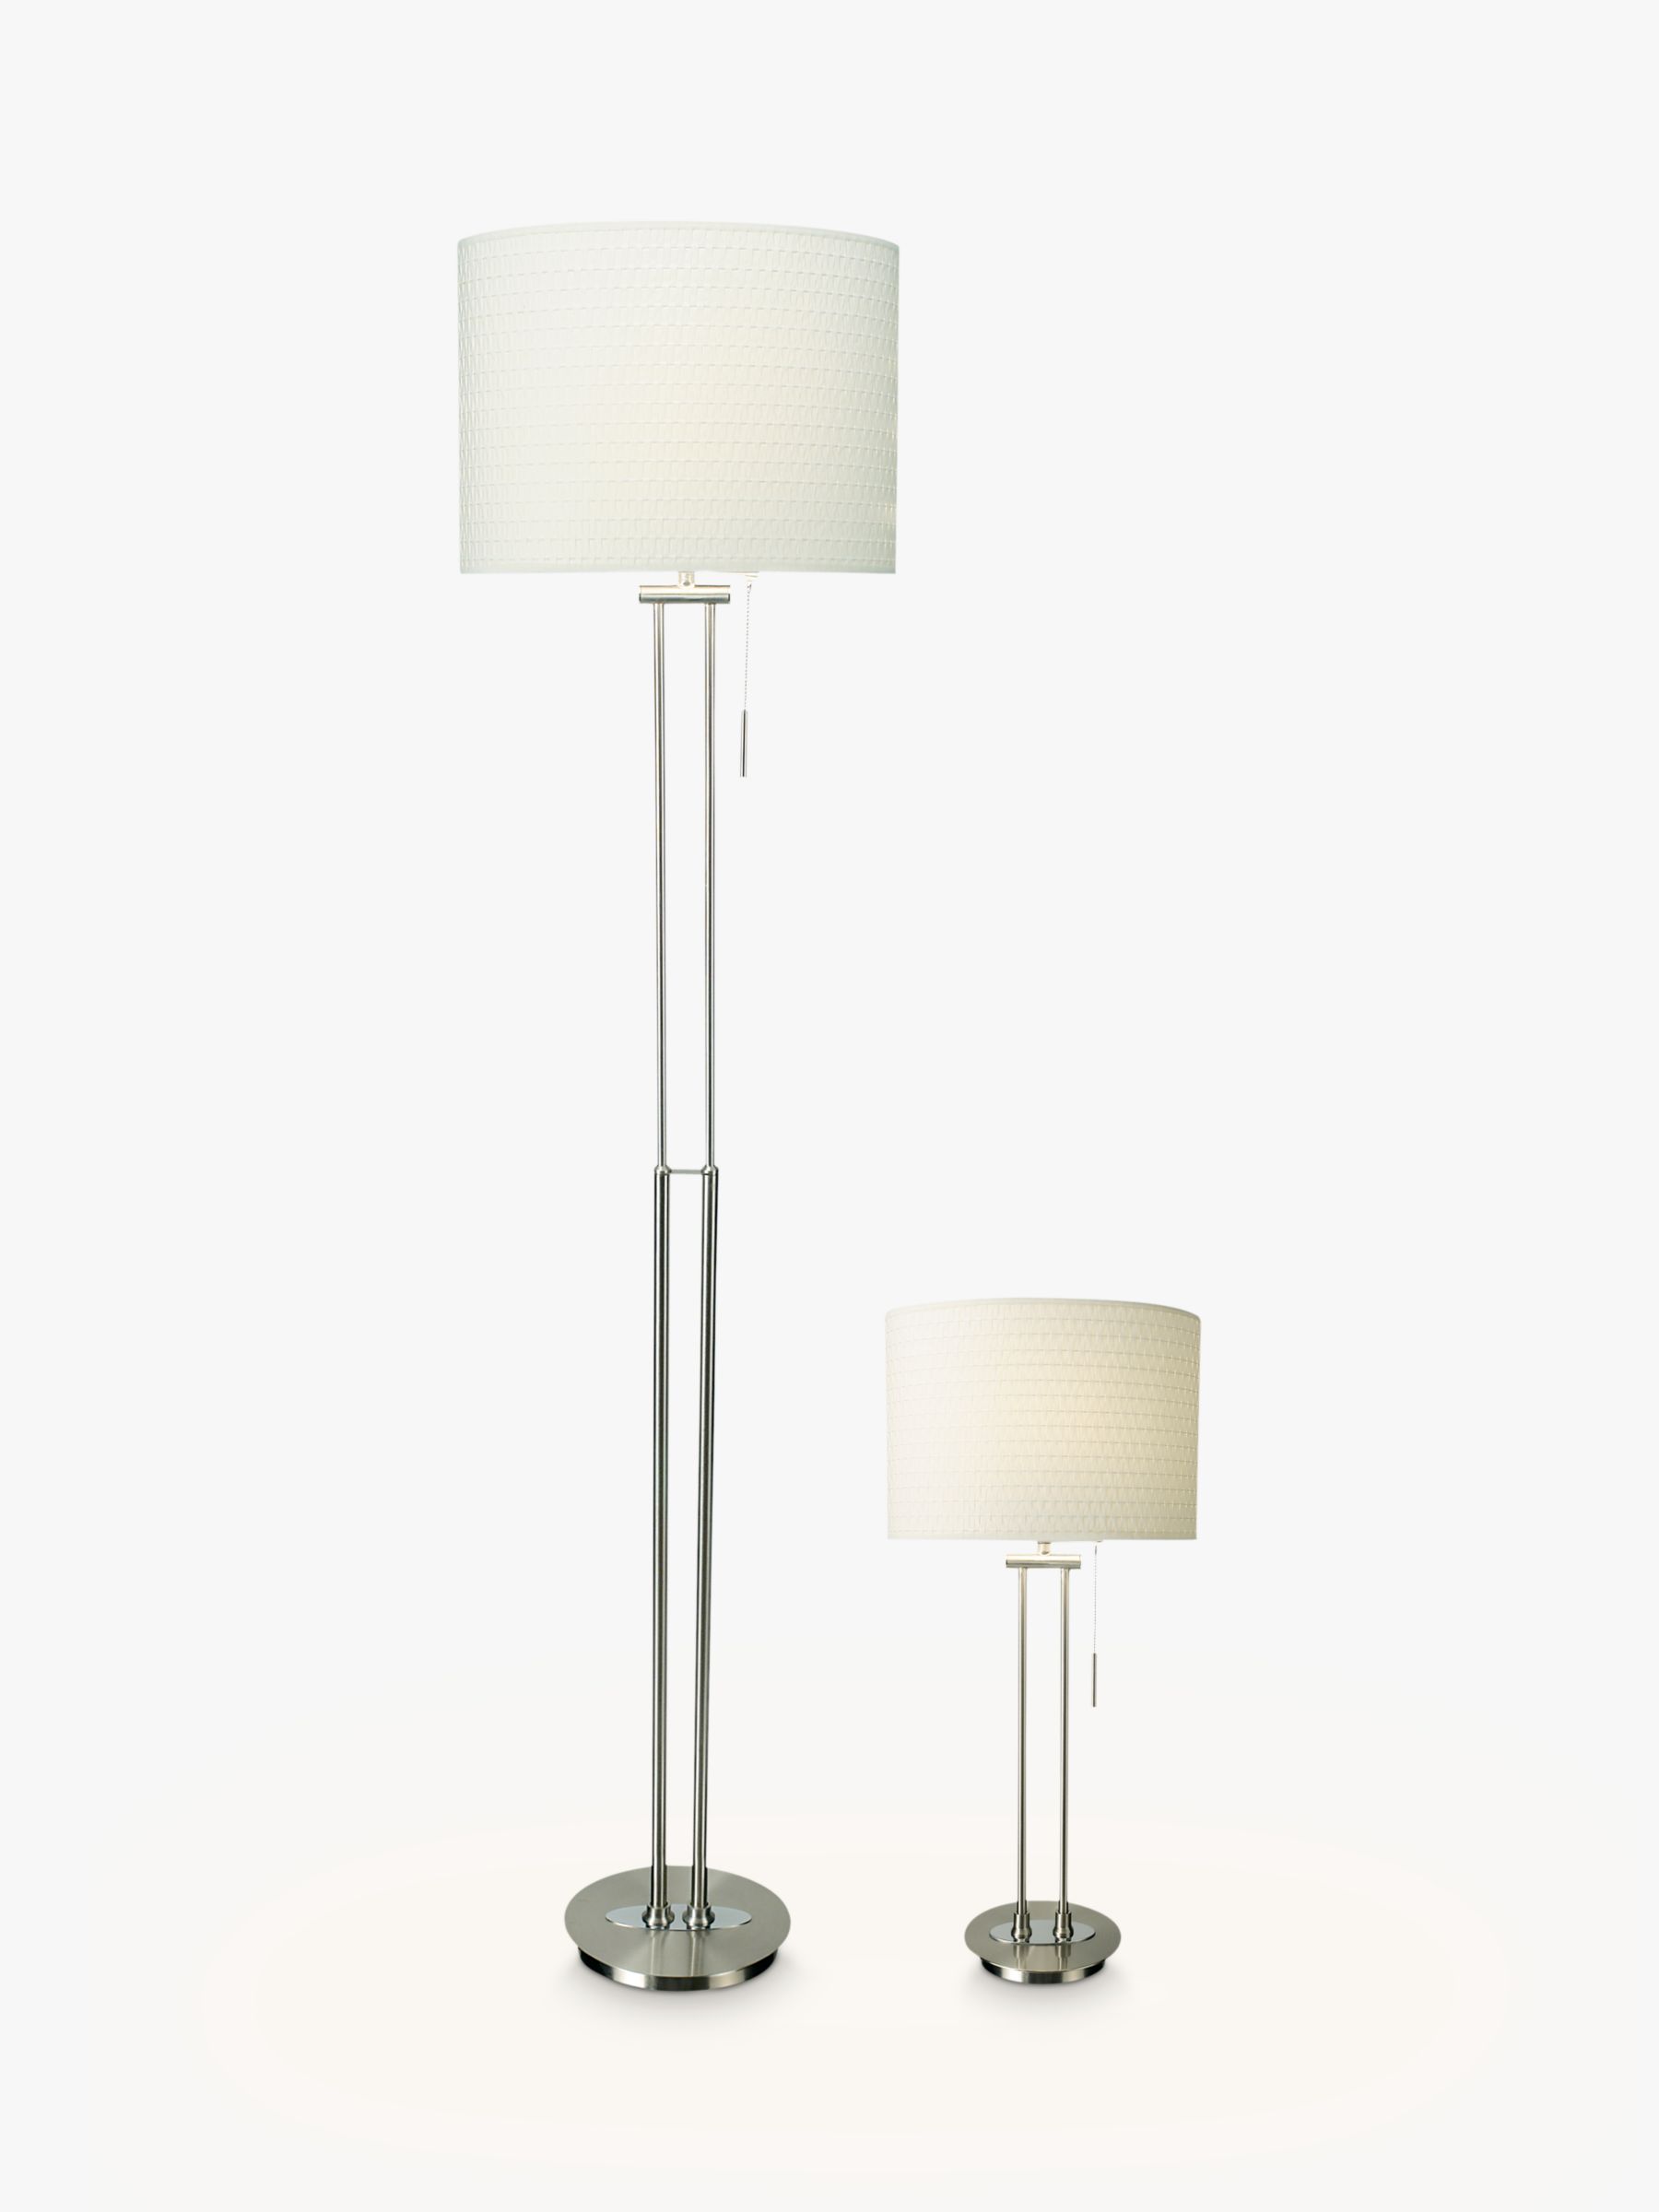 Preston Table and Floor Lamp Duo